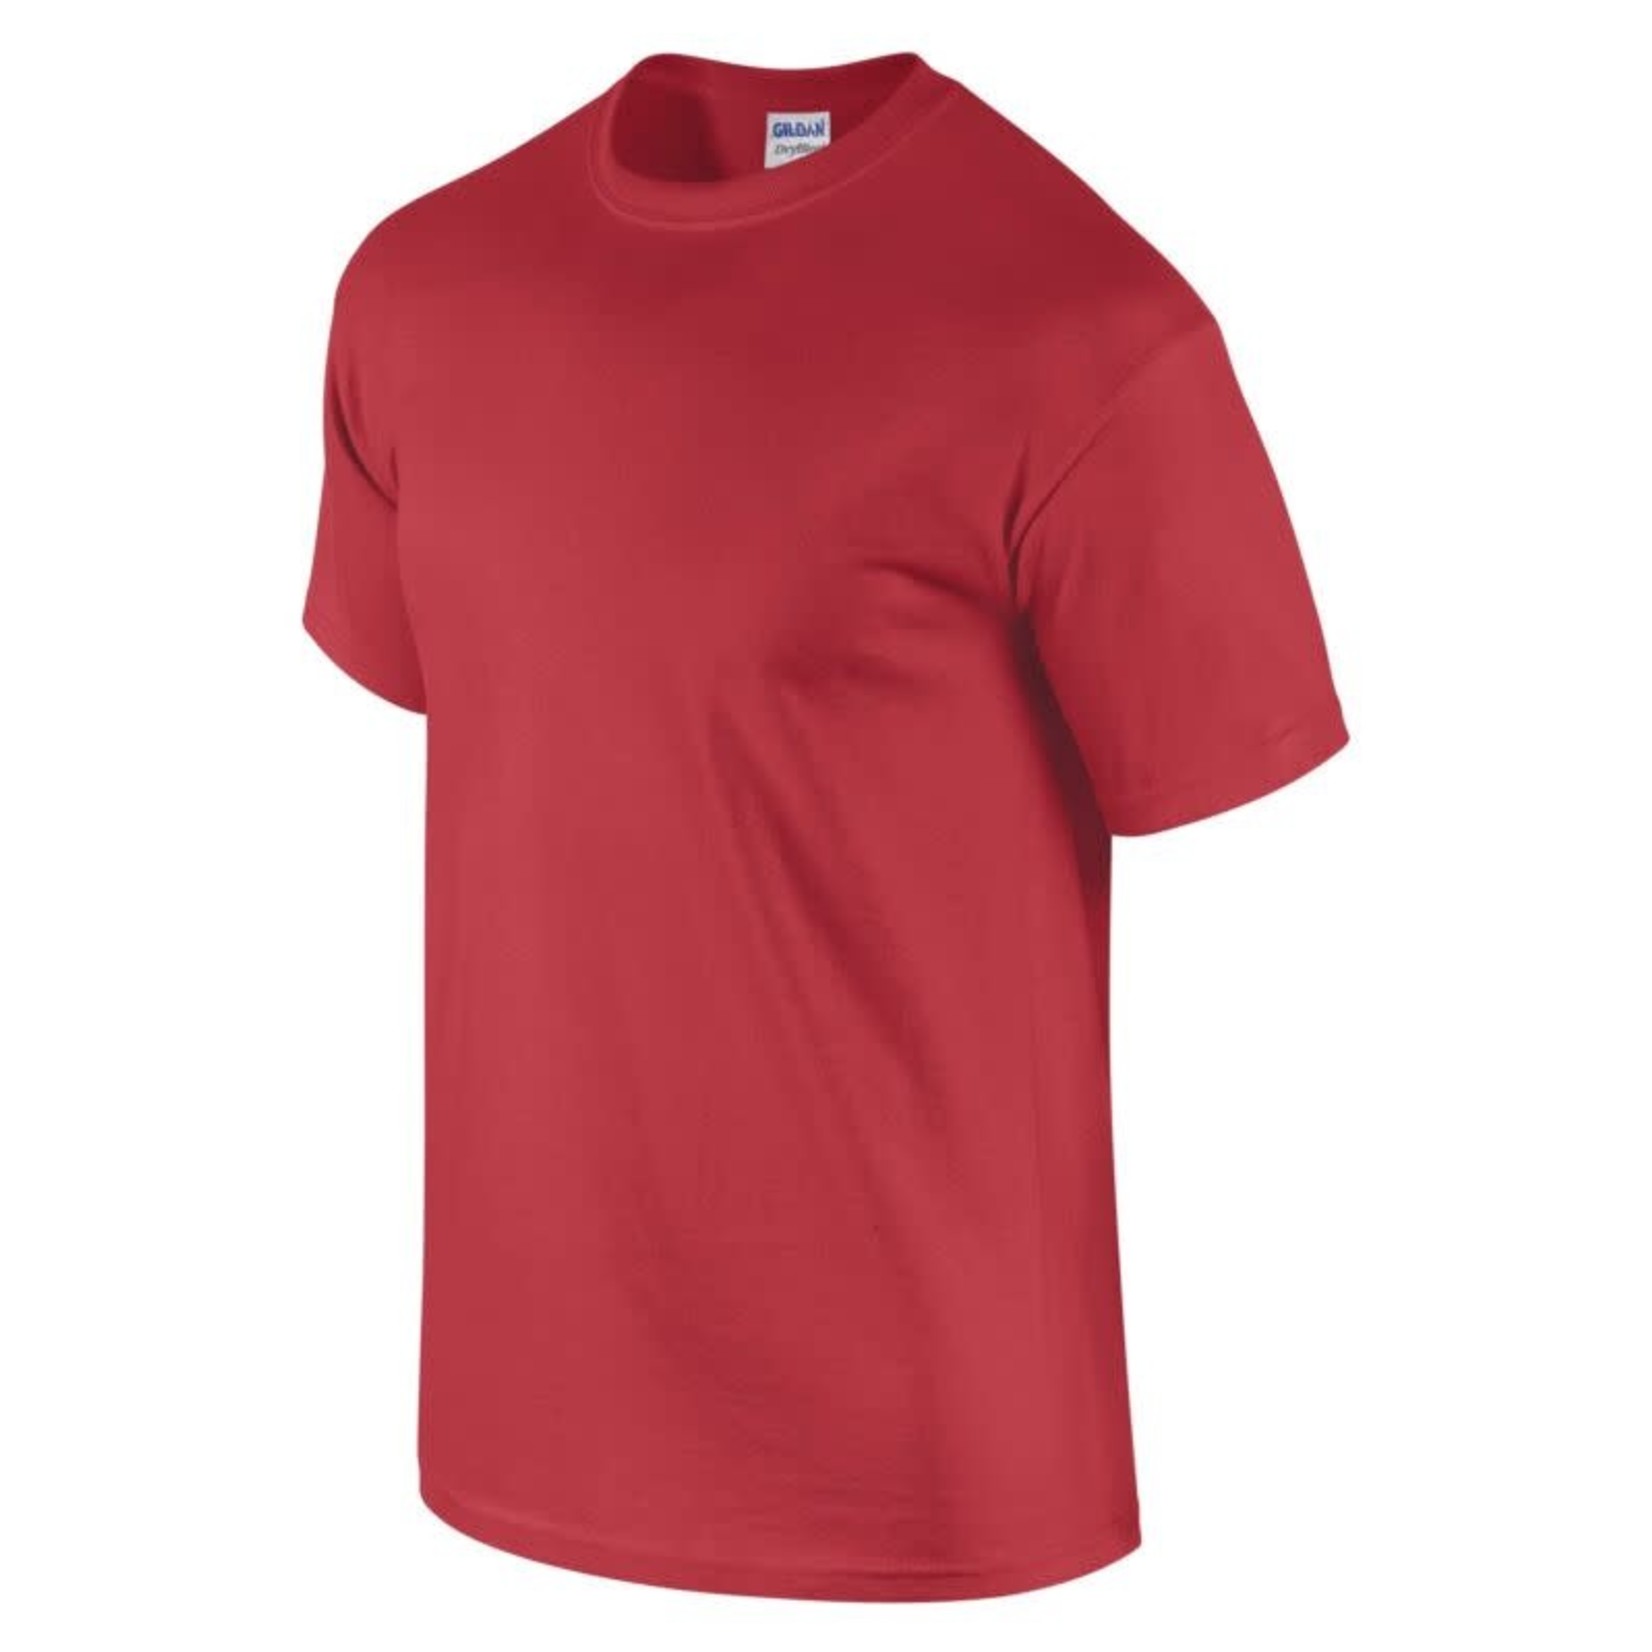 Gildan Gildan Dryblend 8000 T-Shirt